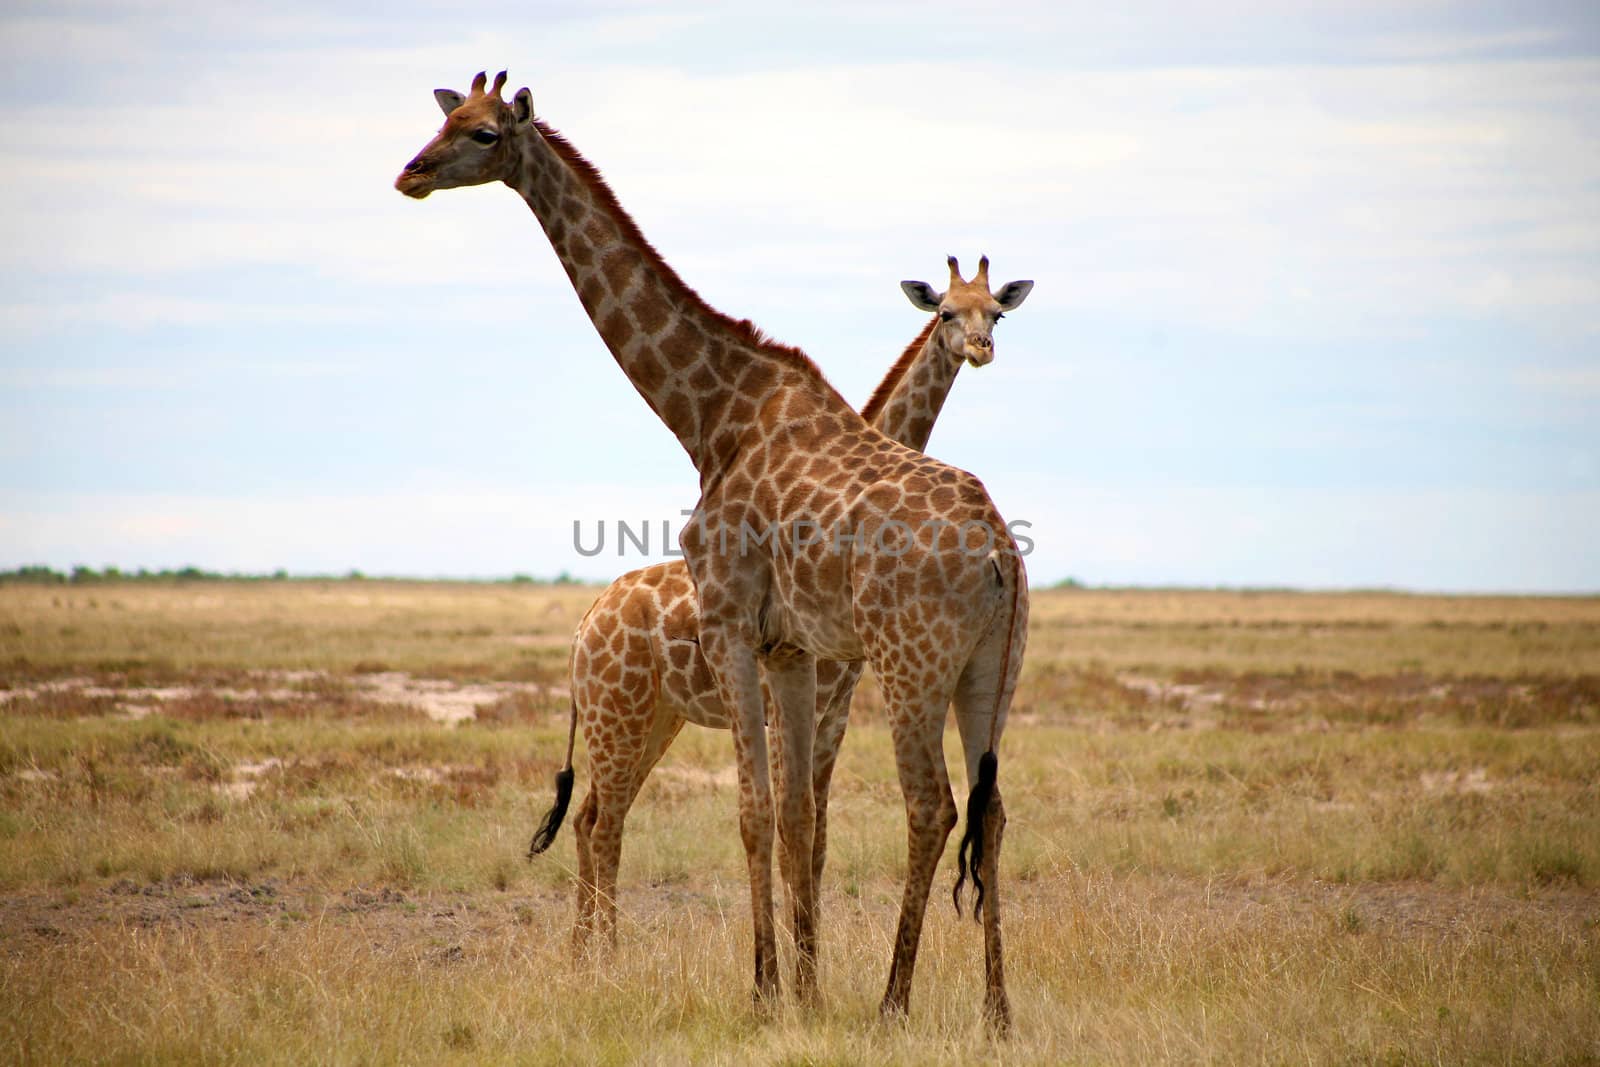 Two Giraffes in Etosha - North of Namibia